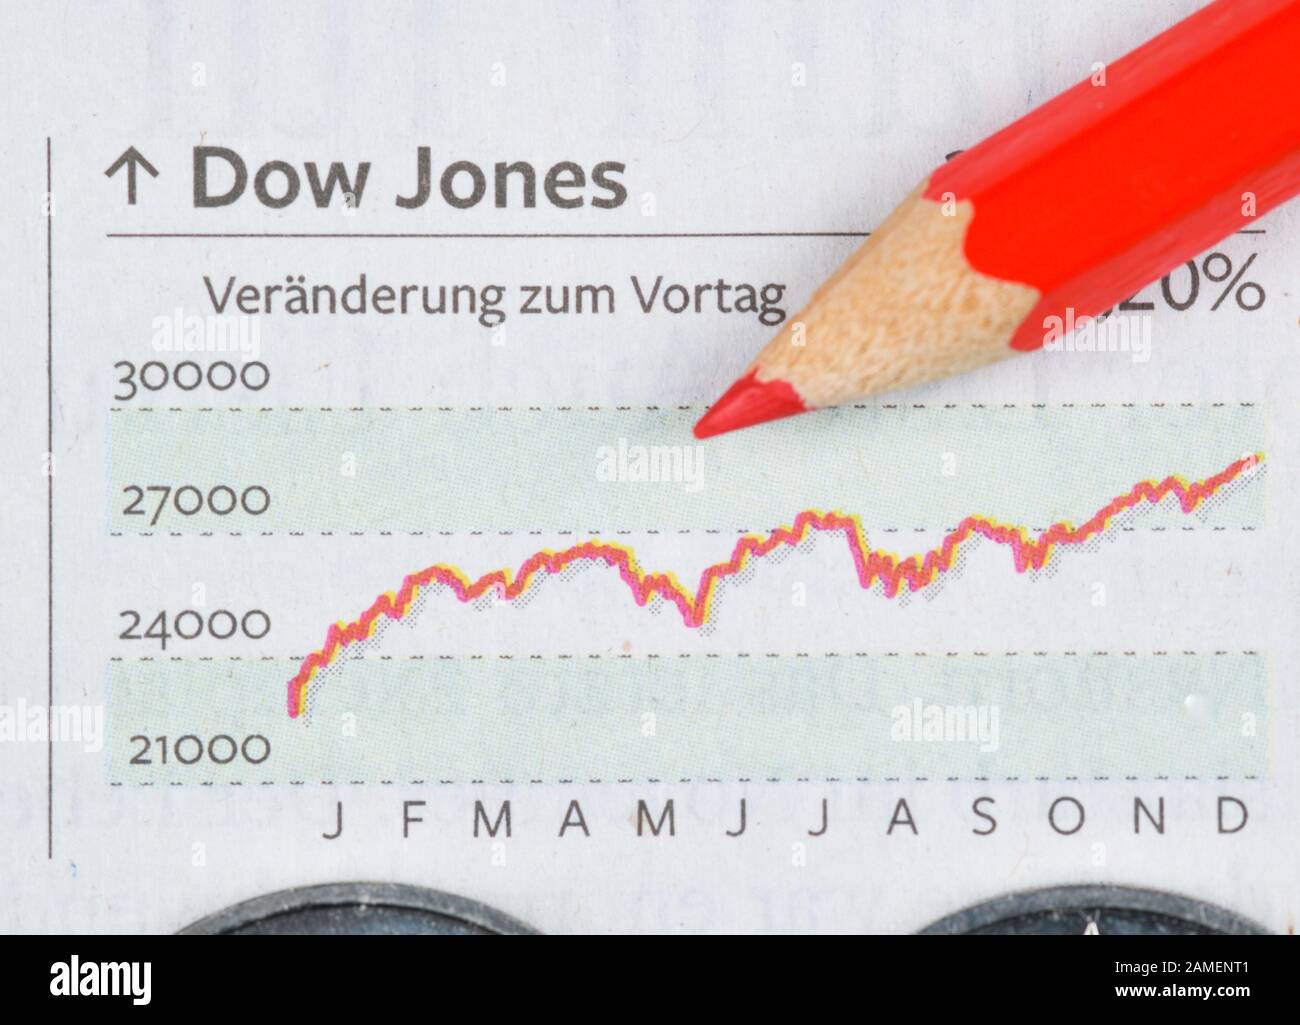 Zeitung, Börsenteil, Dow Jones Stock Photo